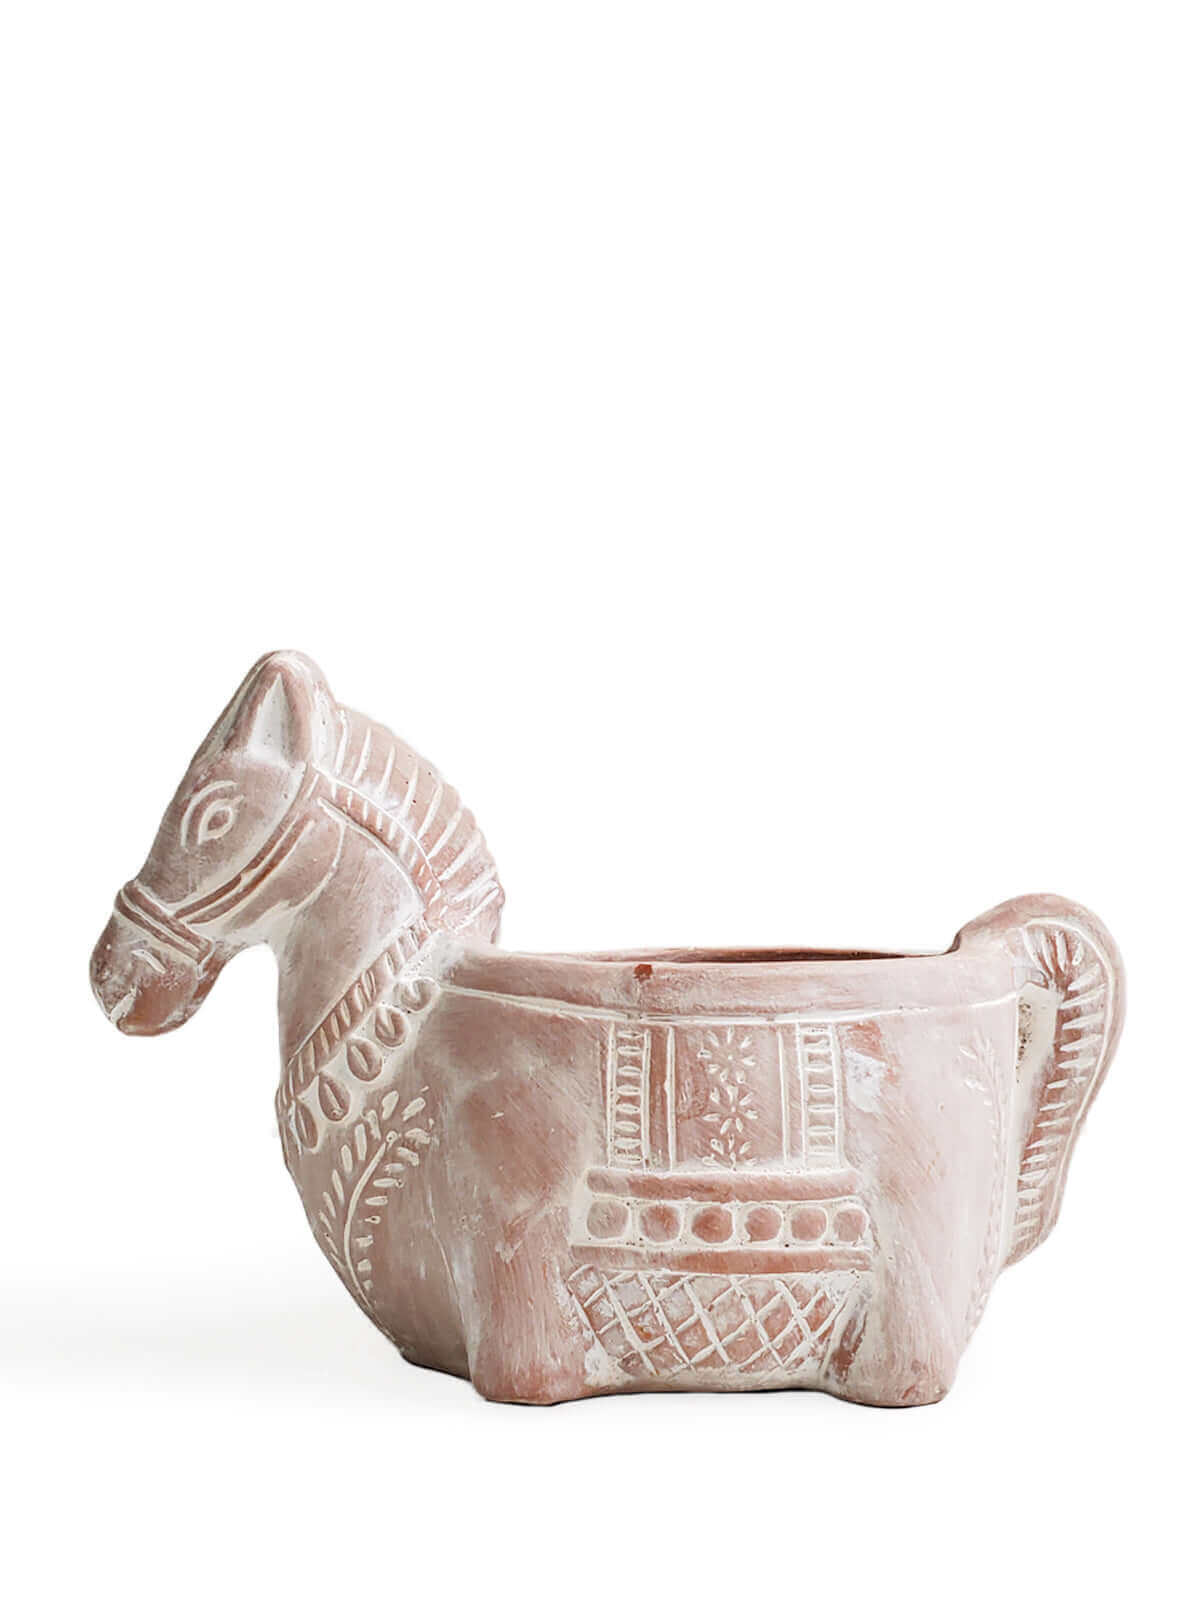 Terracotta Pot - Horse-7